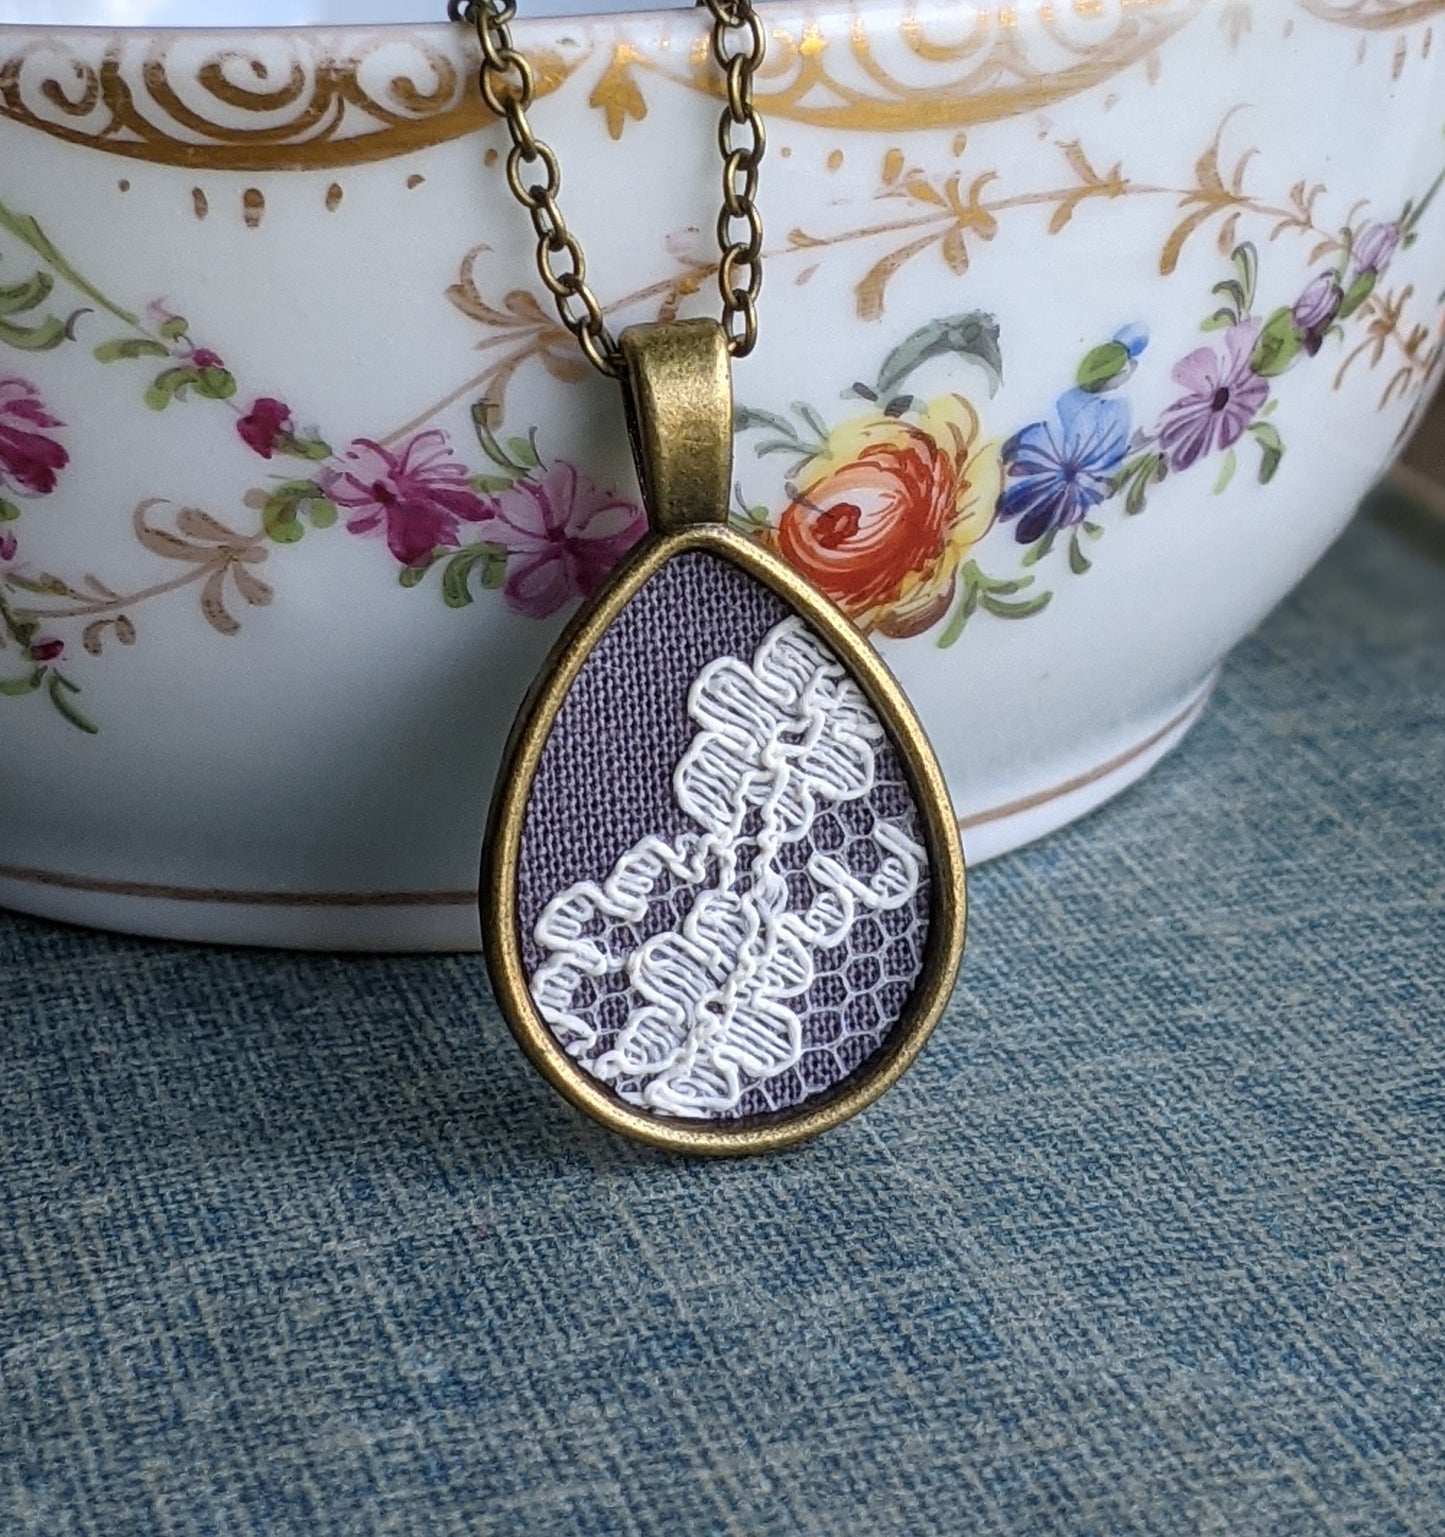 Art Nouveau Lace Teardrop Necklace, Unique Gift For Wife, Mom, Or Friend